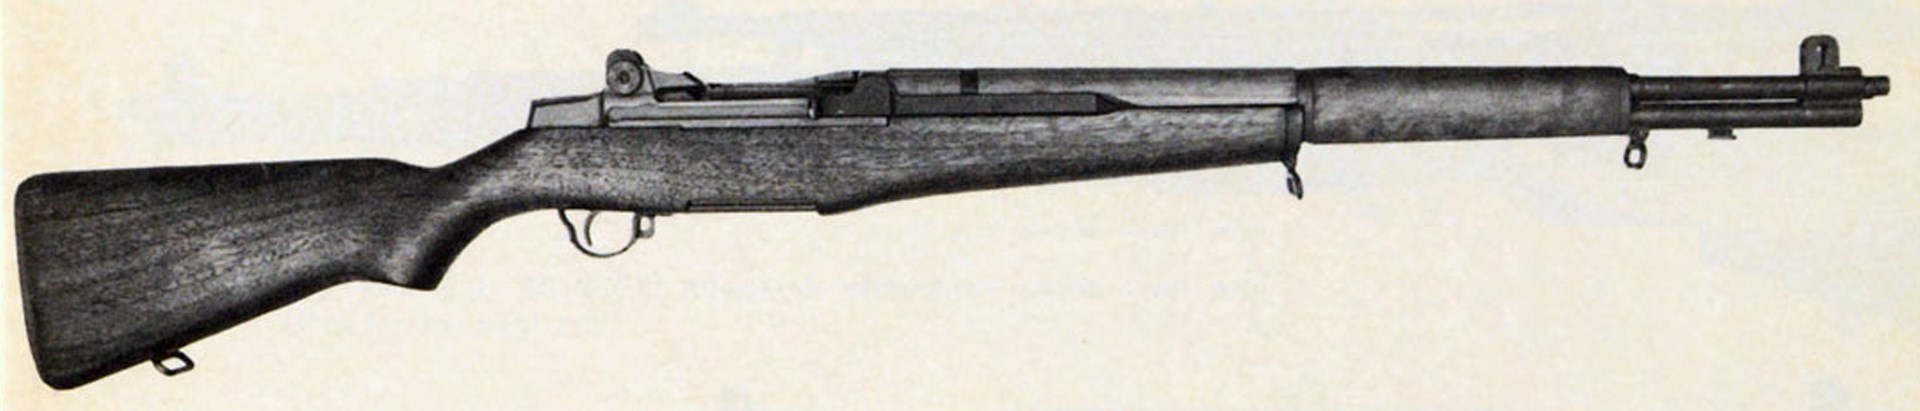 U.S. Rifle Cal. .30 M1, the famed Garand Rifle.